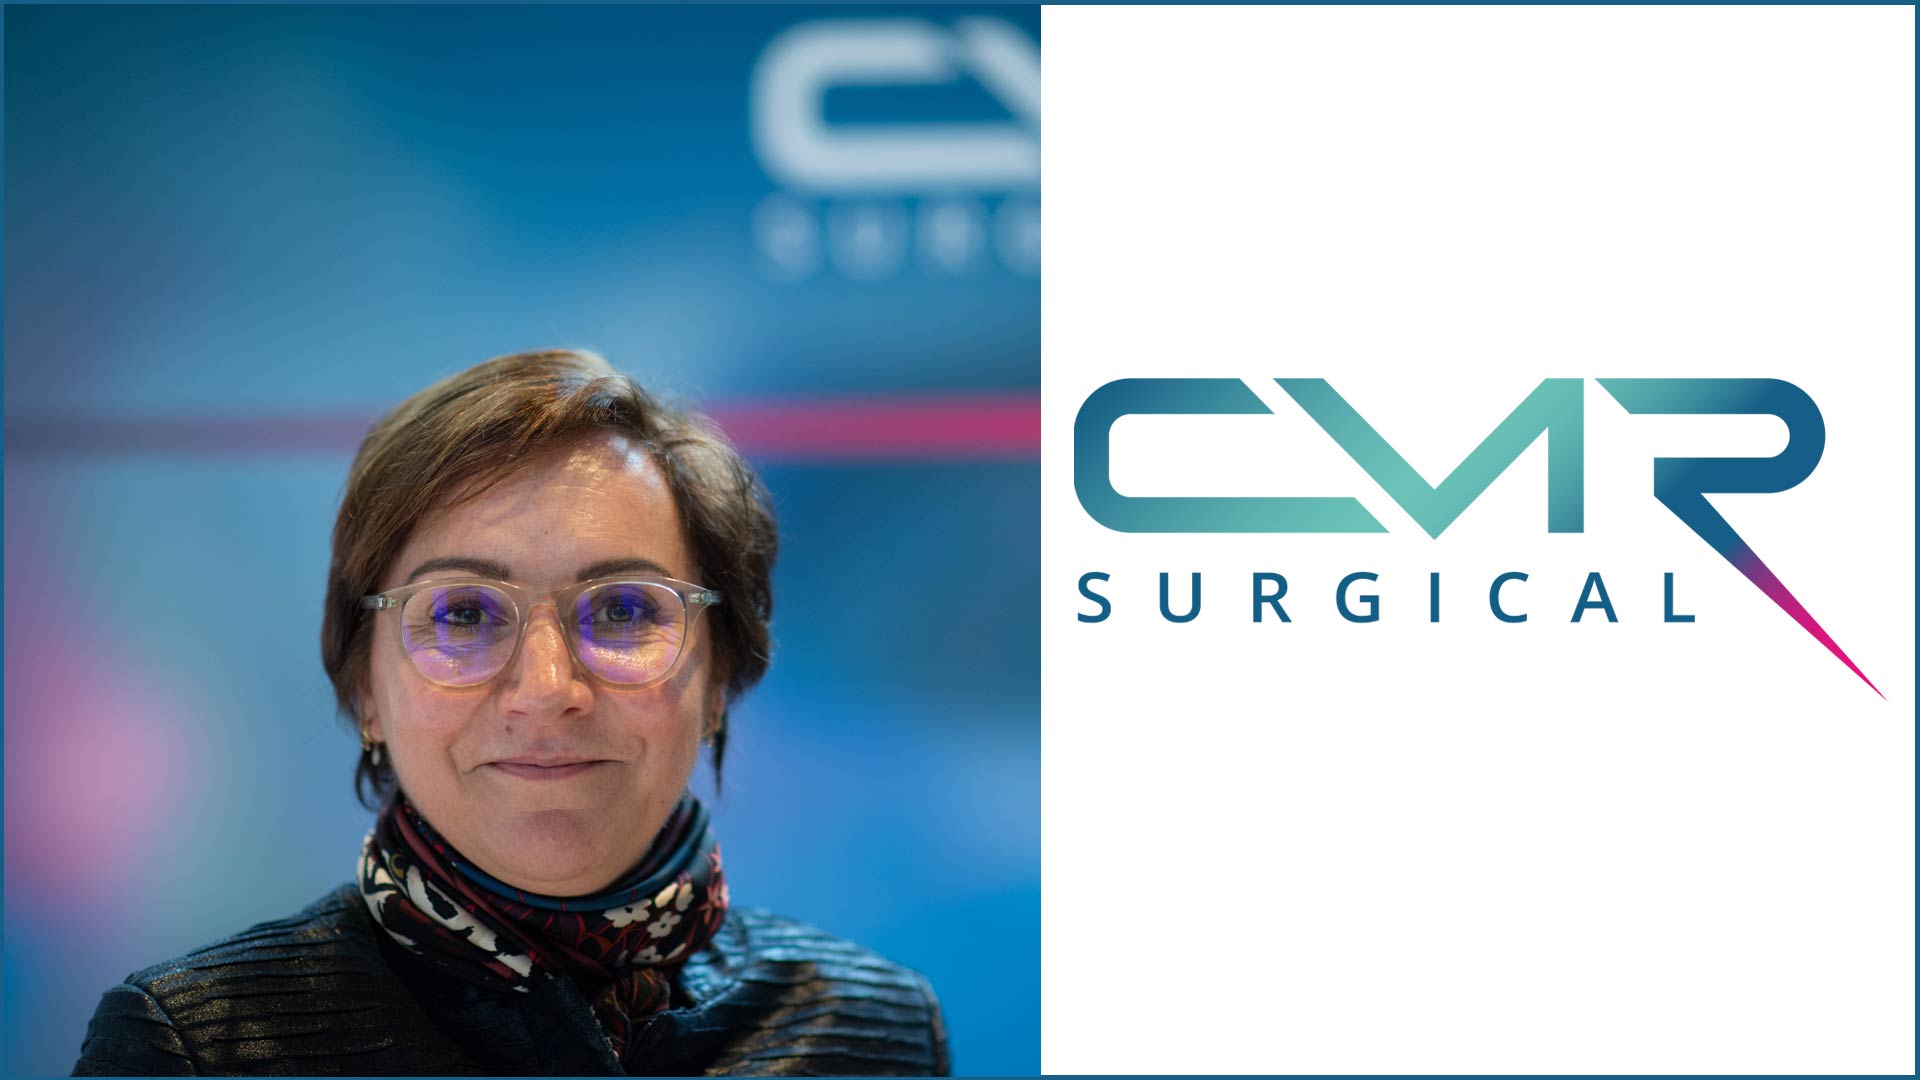 CMR Surgical, Revolutionizing Surgery